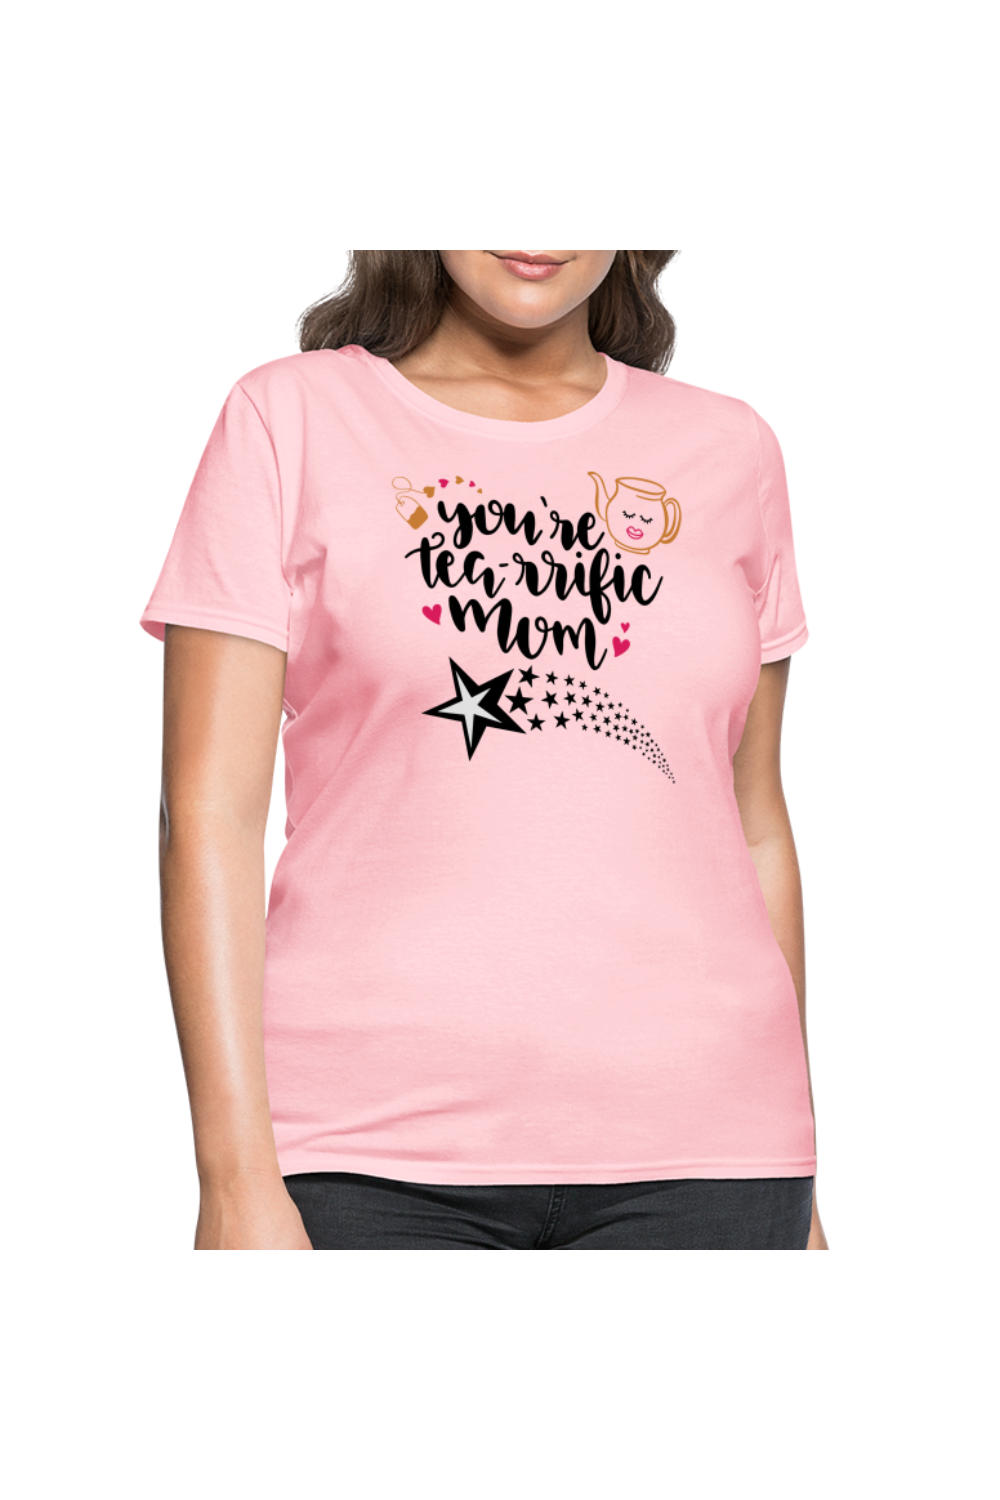 Women's Tea-rrific Mom T-Shirt - pink